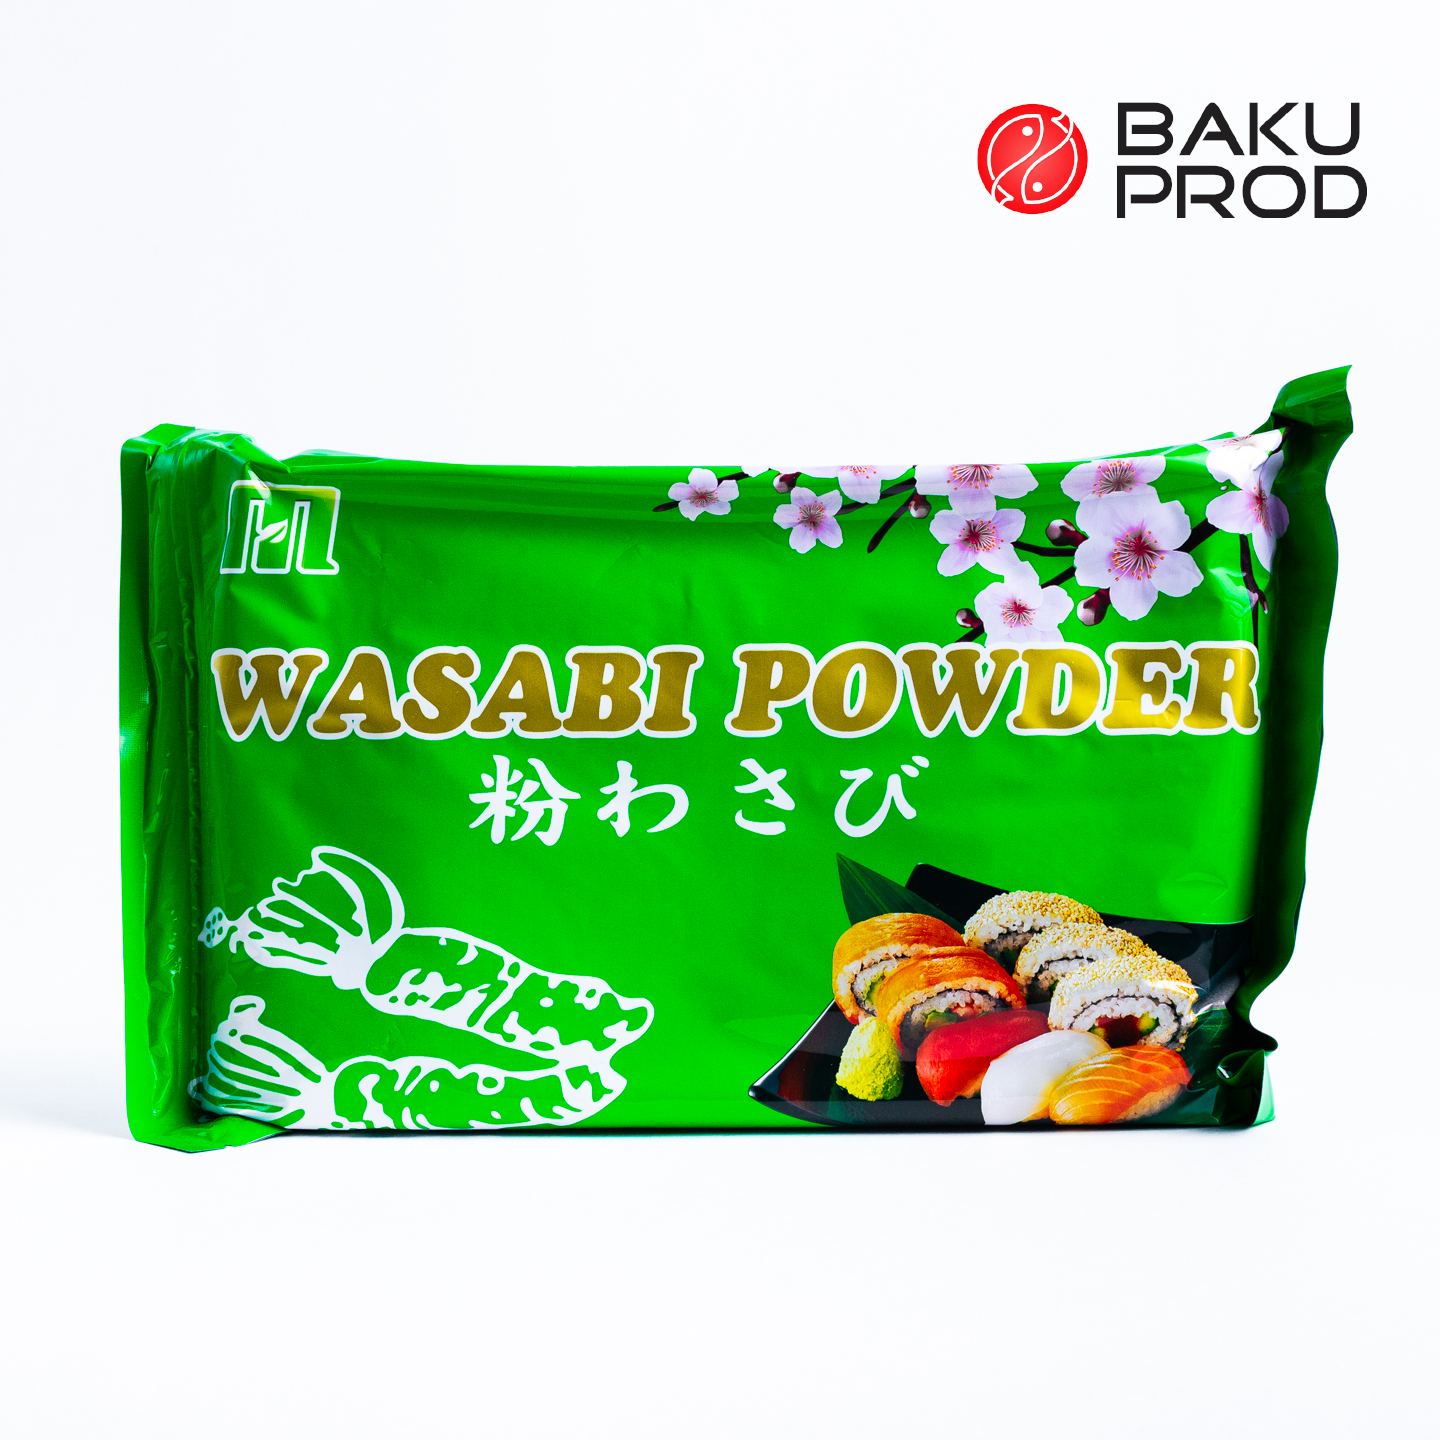 Wasabi powder for sushi Baku Prod